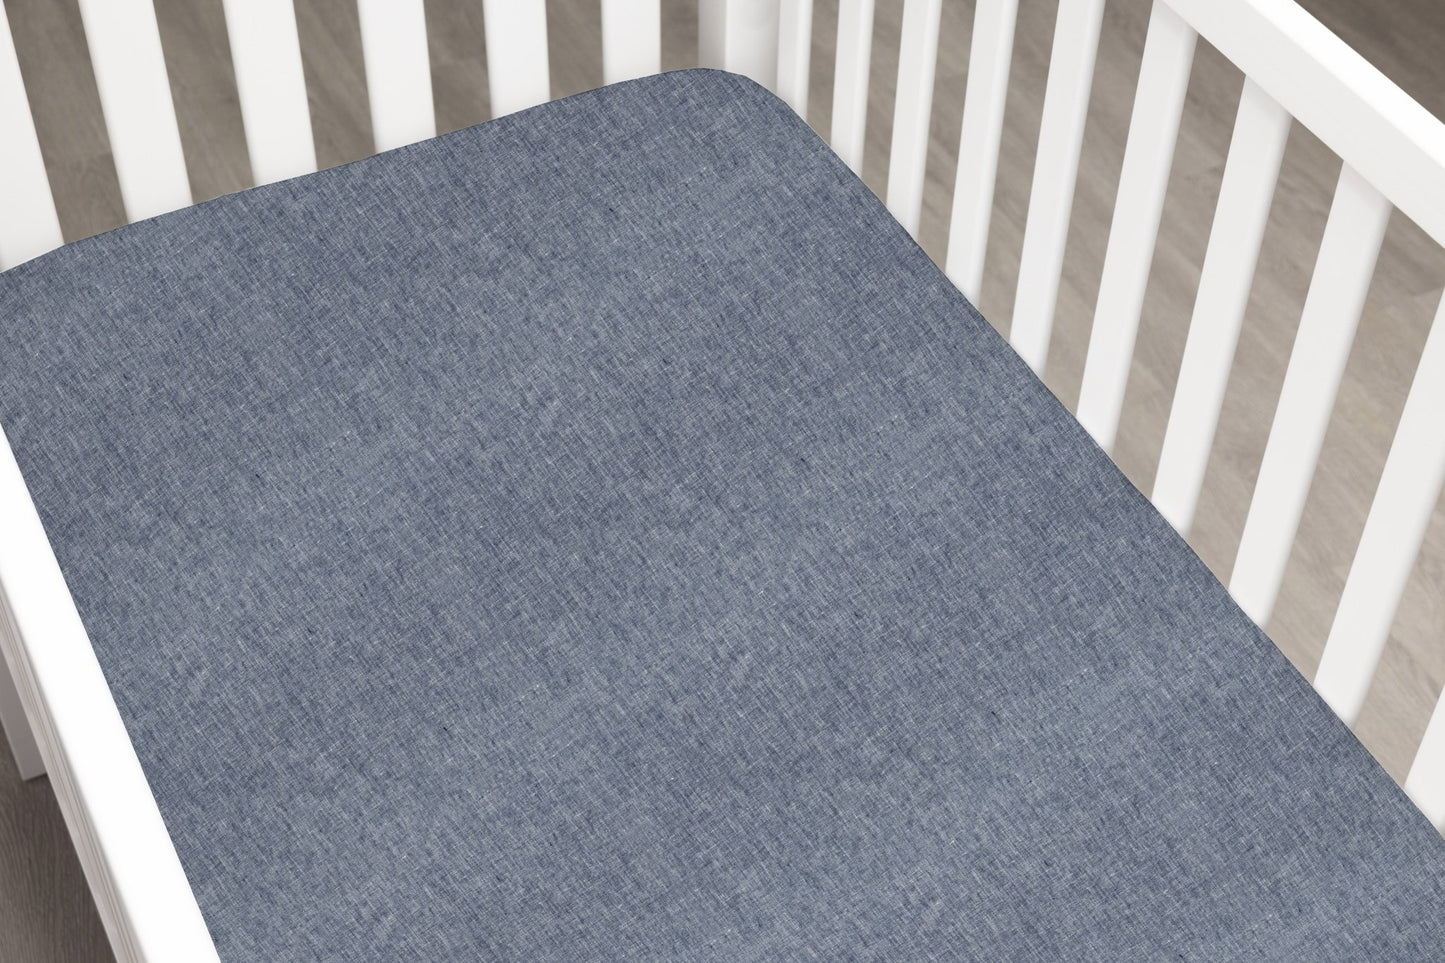 Denim Blue Linen Crib Sheet - New Arrivals Inc